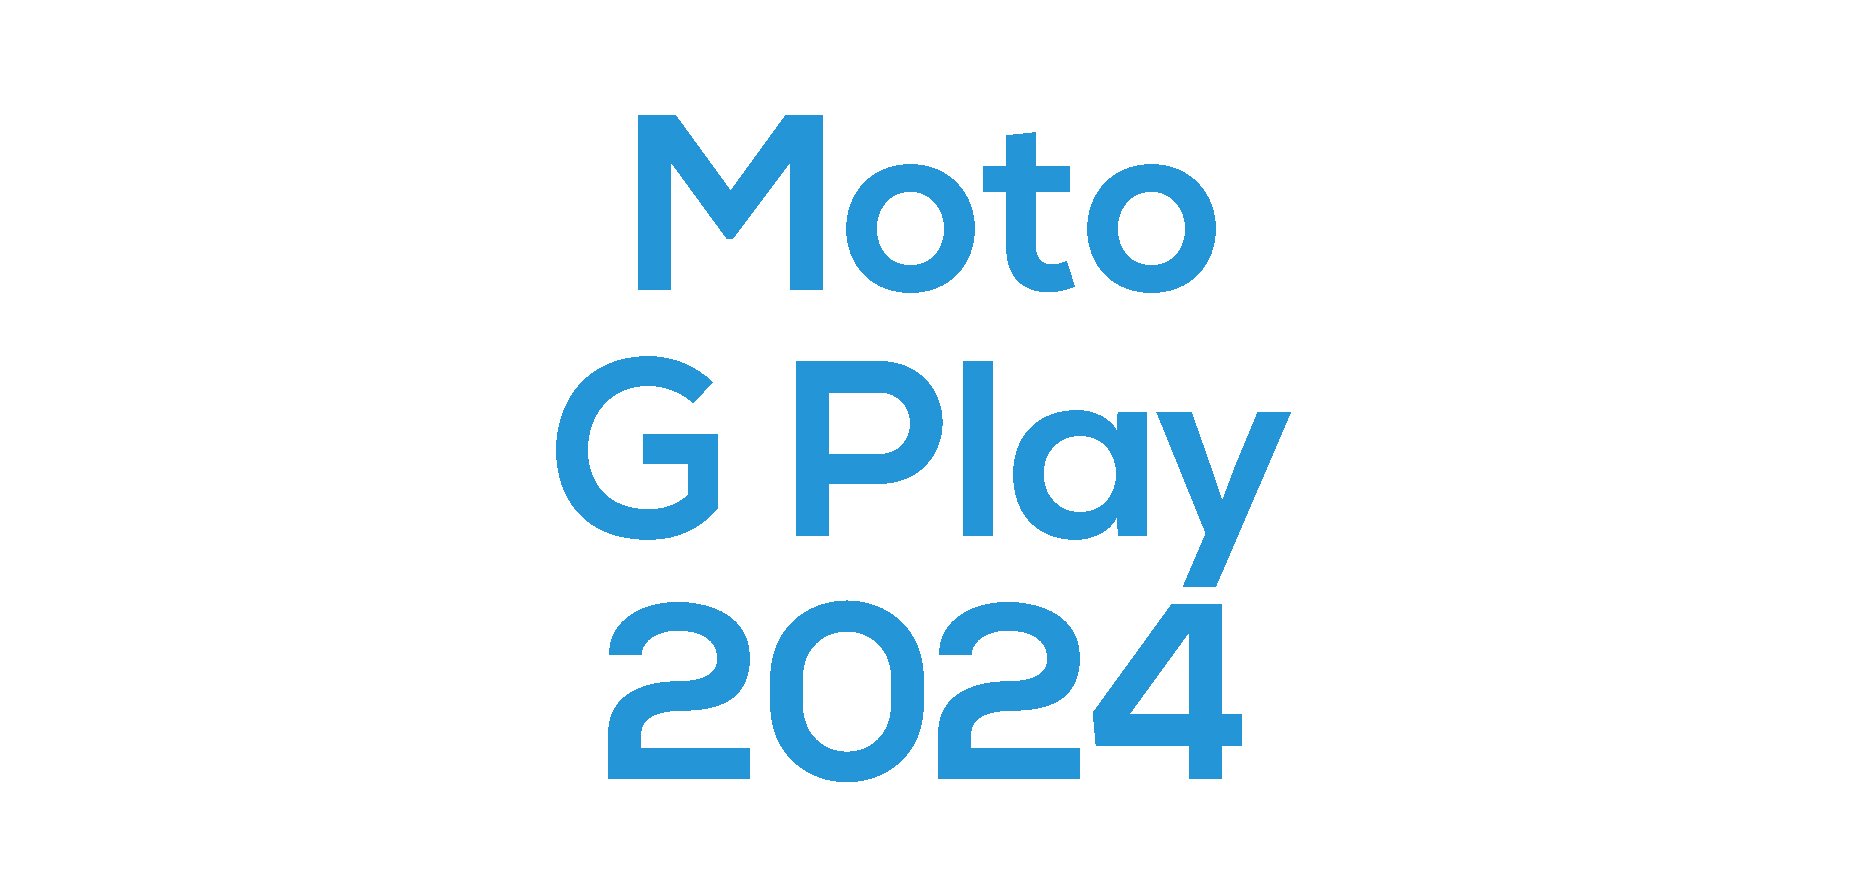 G Play 2024 (XT2413-2)